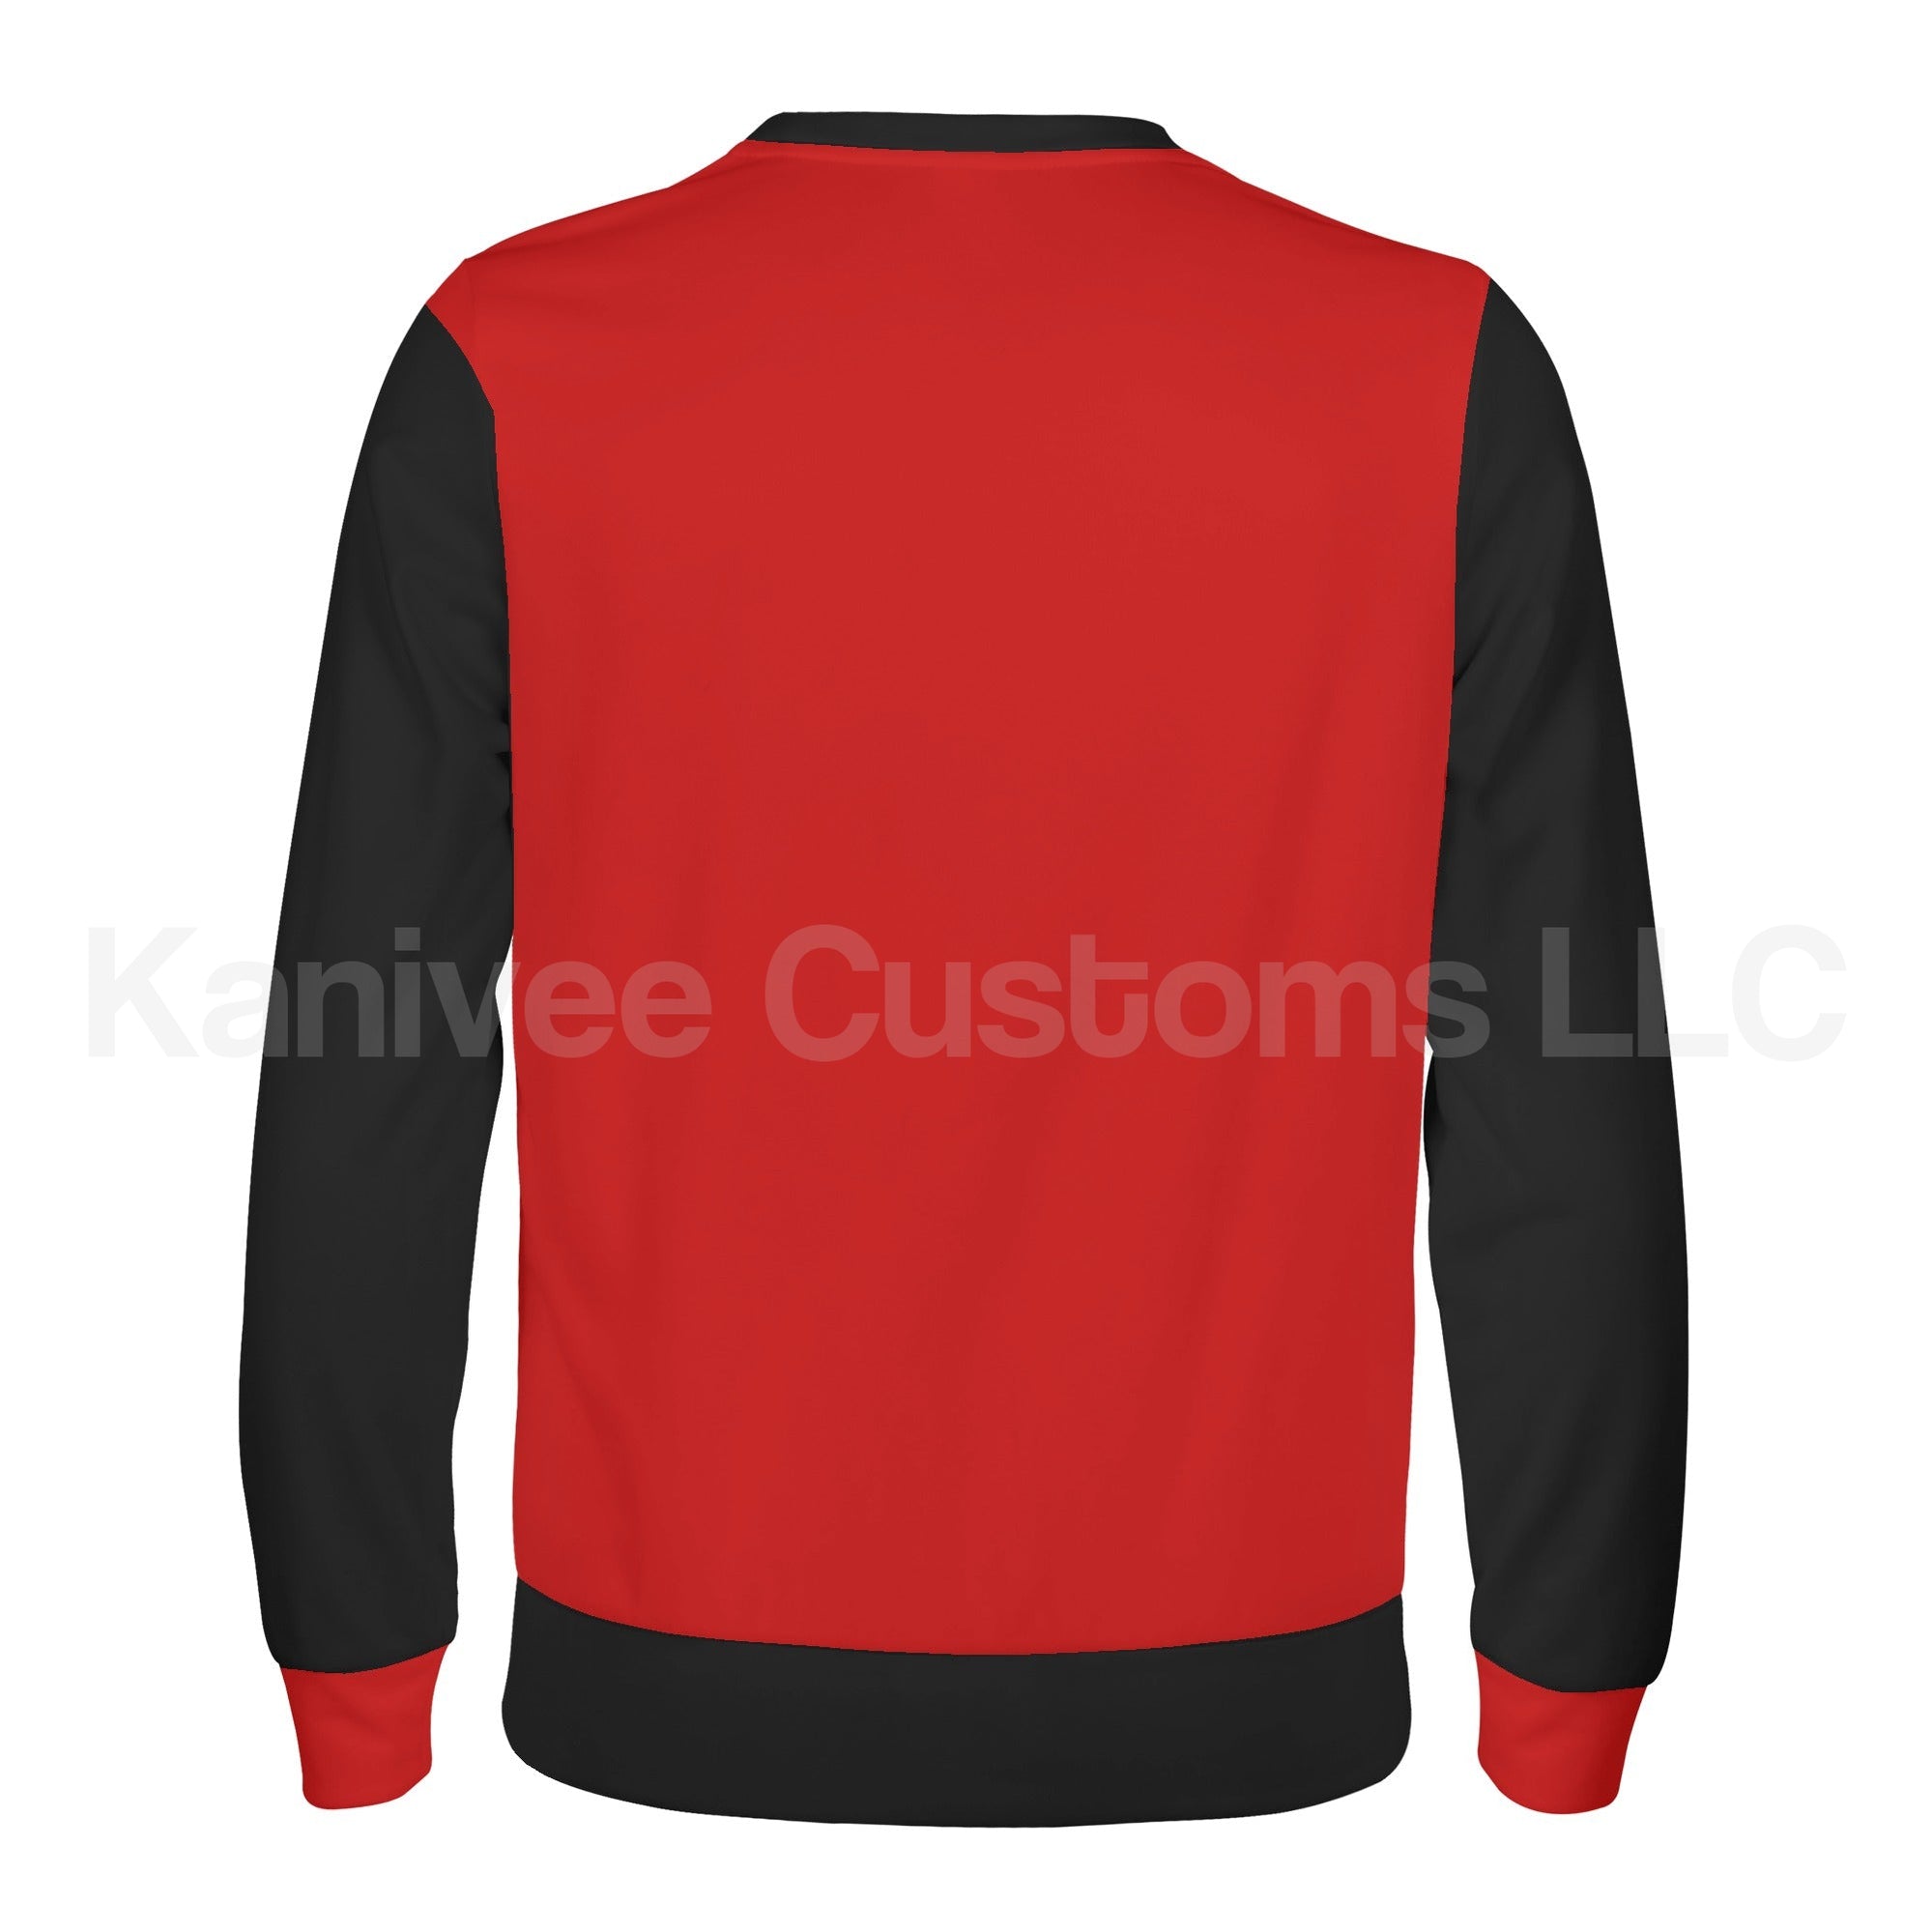 "Woke" Walking With Power Sweater (Lv.1) - Kanivee Customs